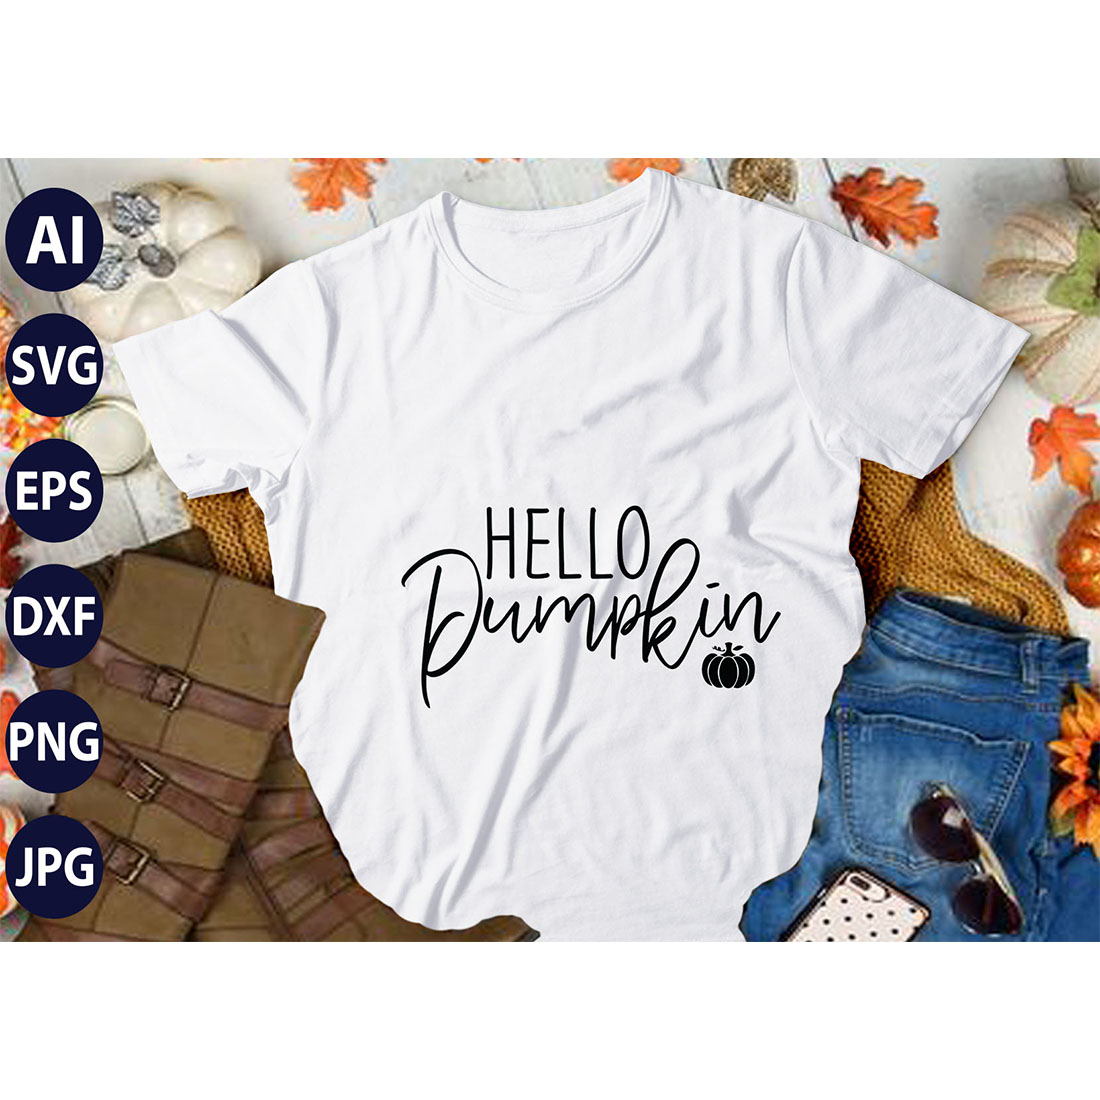 Hello Pumpkin, SVG T-Shirt Design |Happy Halloween & Pumpkin T-Shirt Design | Ai, Svg, Eps, Dxf, Jpeg, Png, Instant download T-Shirt | 100% print-ready Digital vector file preview image.